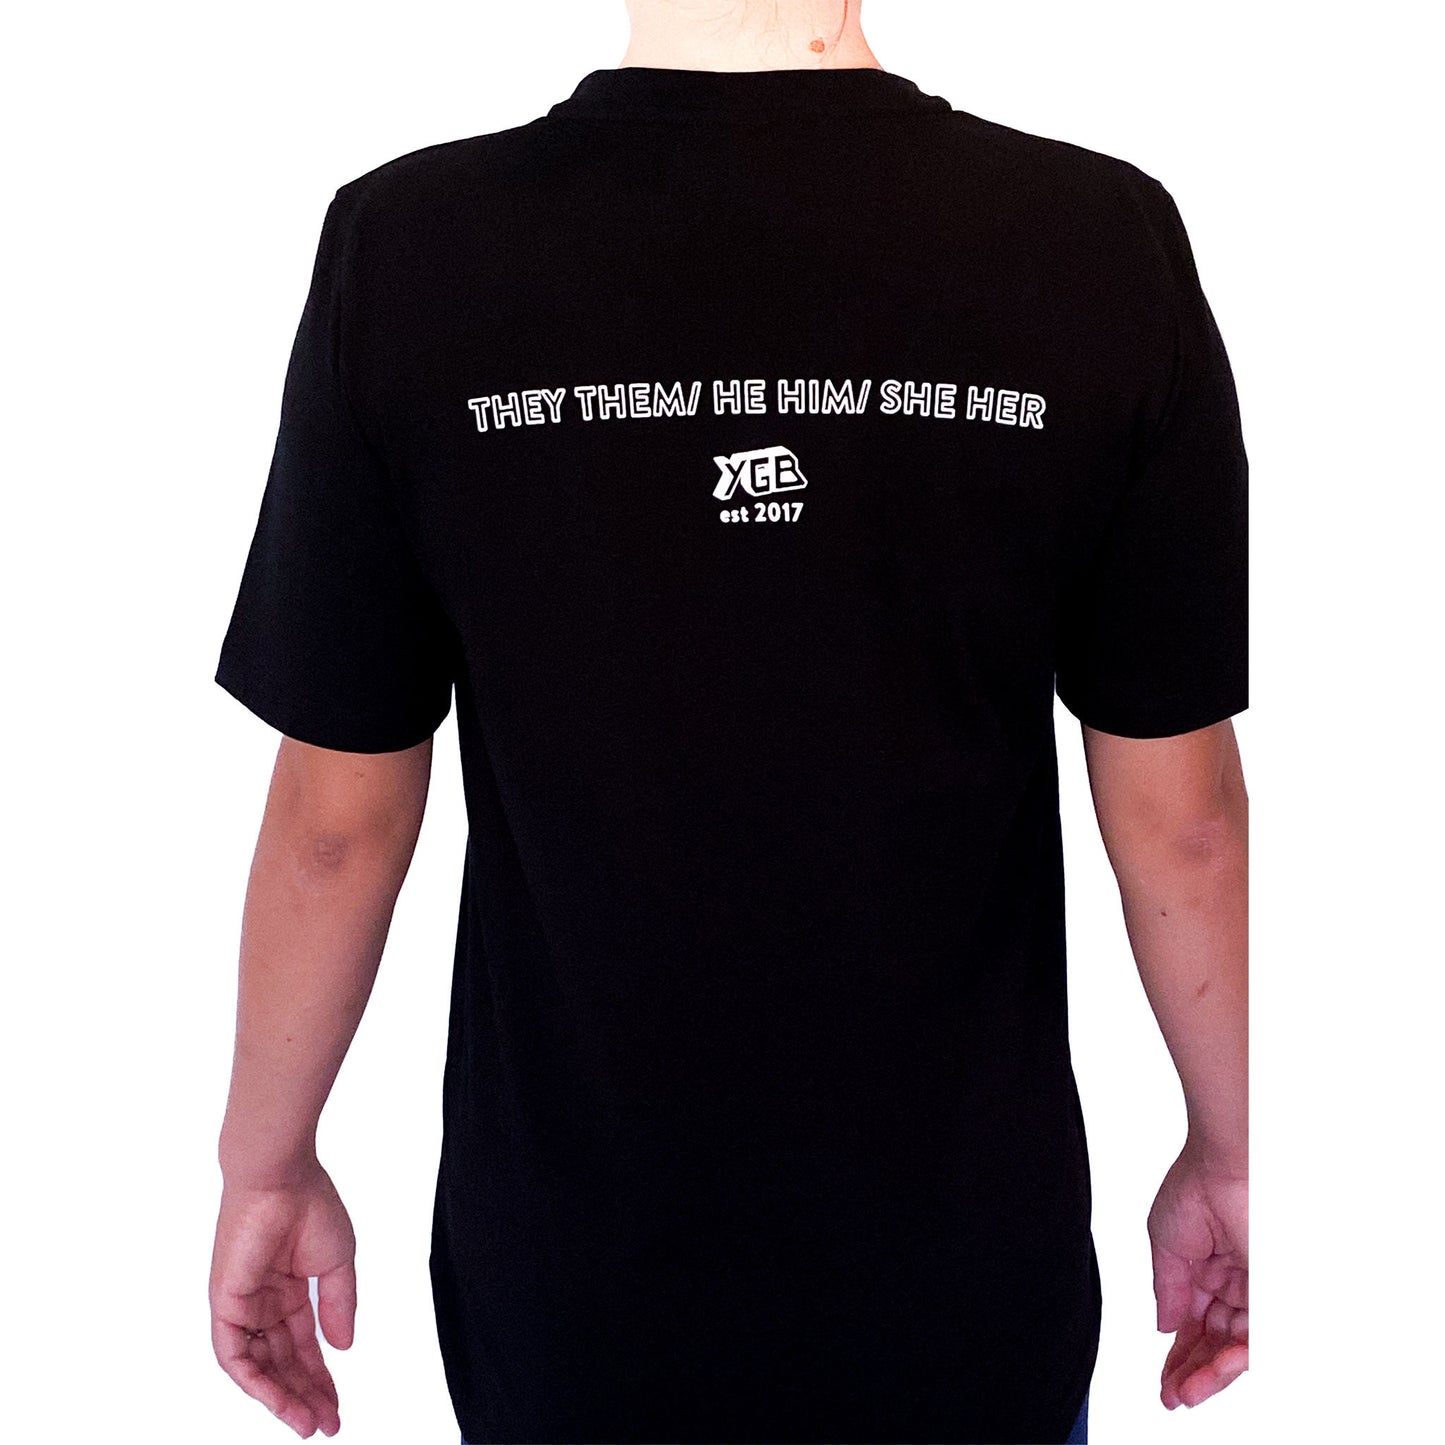 Ethical organic unisex t-shirt Black Crew neck pronouns